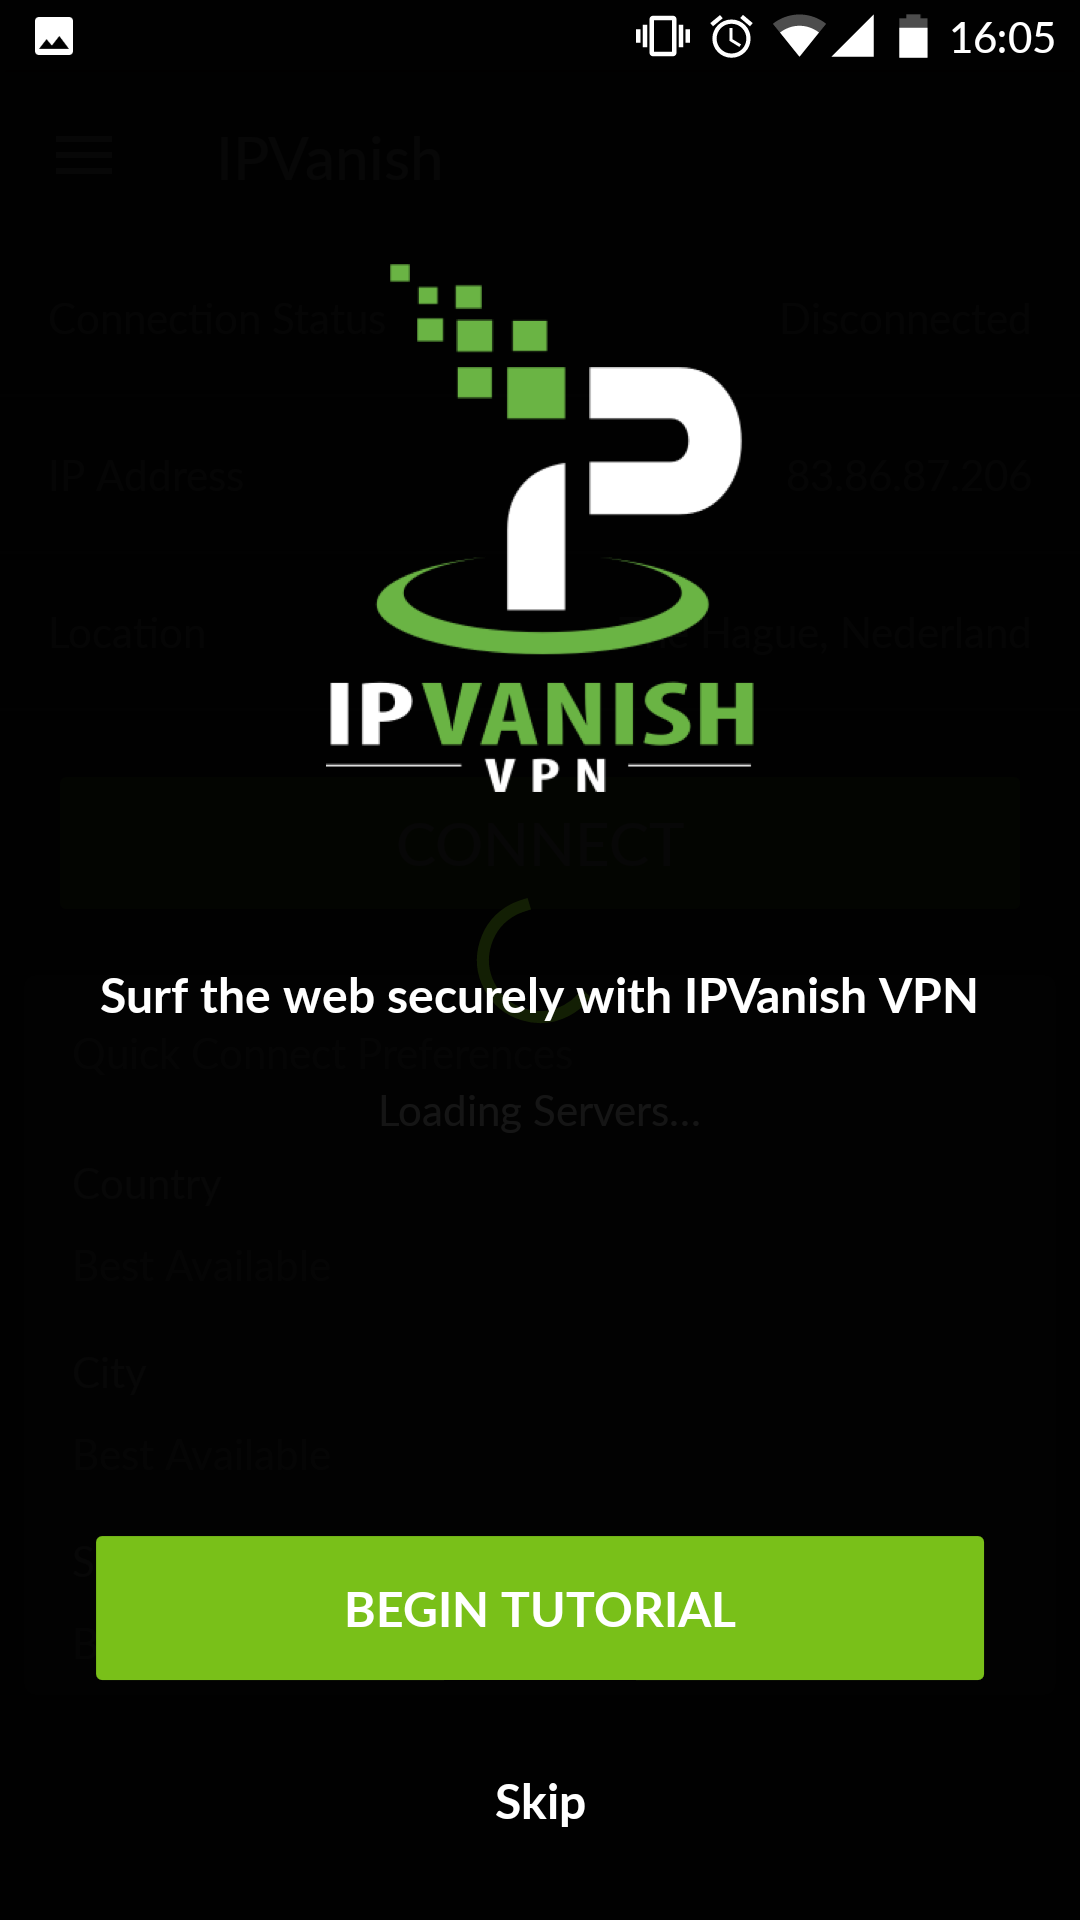 Ready to start with IPVanish